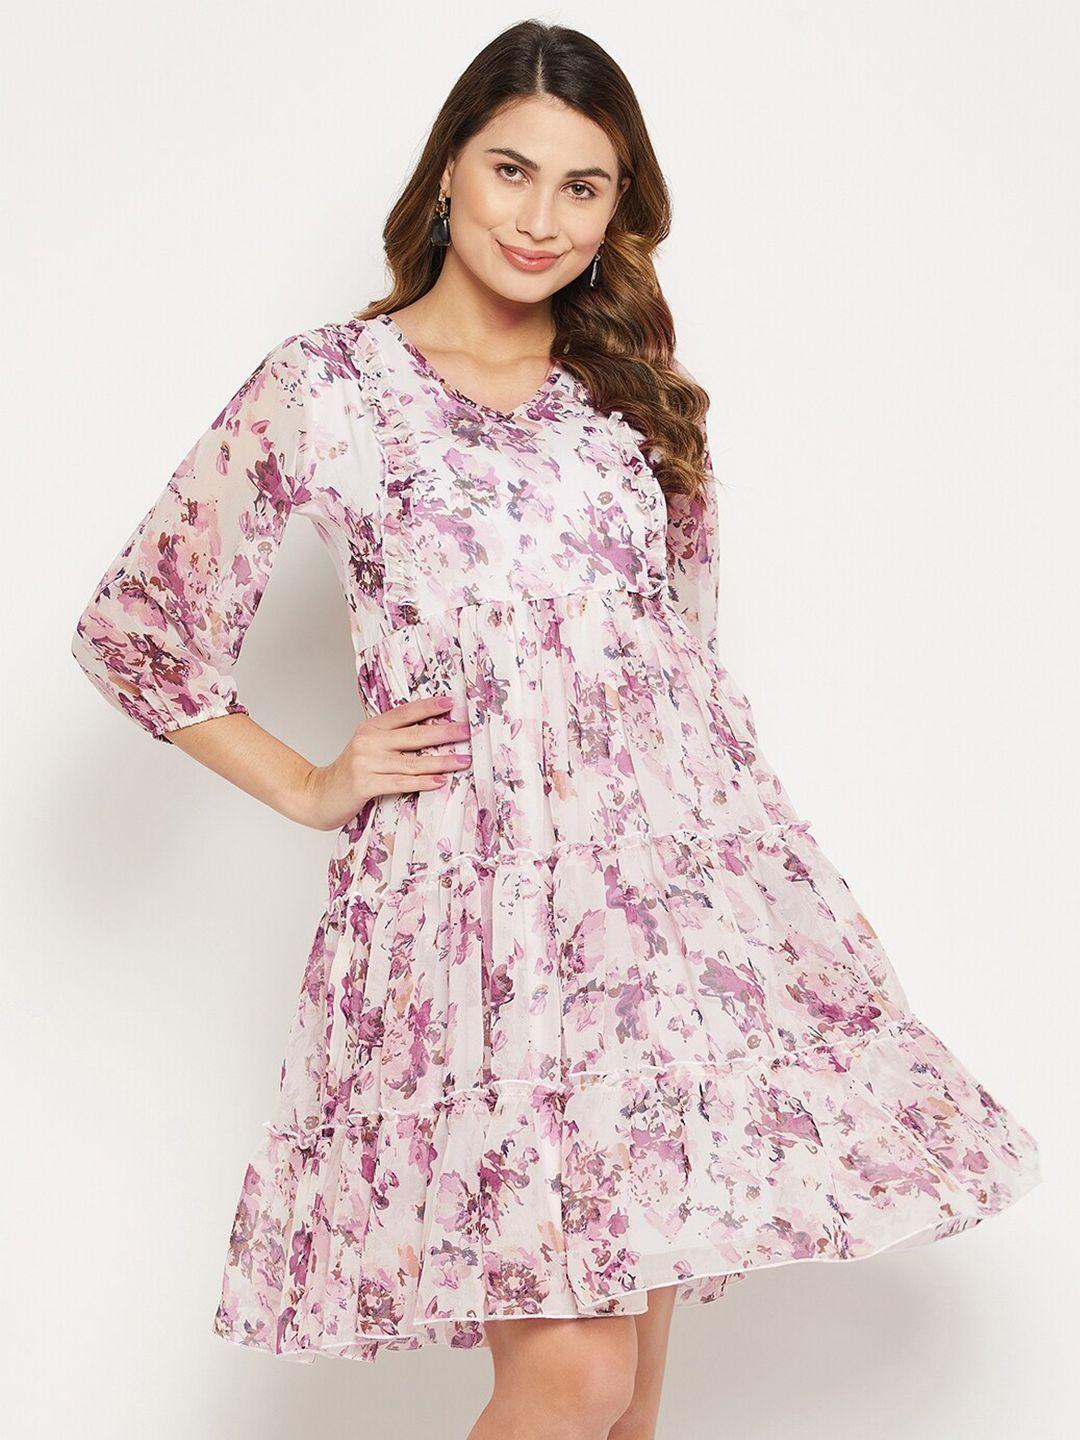 bitterlime-floral-printed-georgette-dress